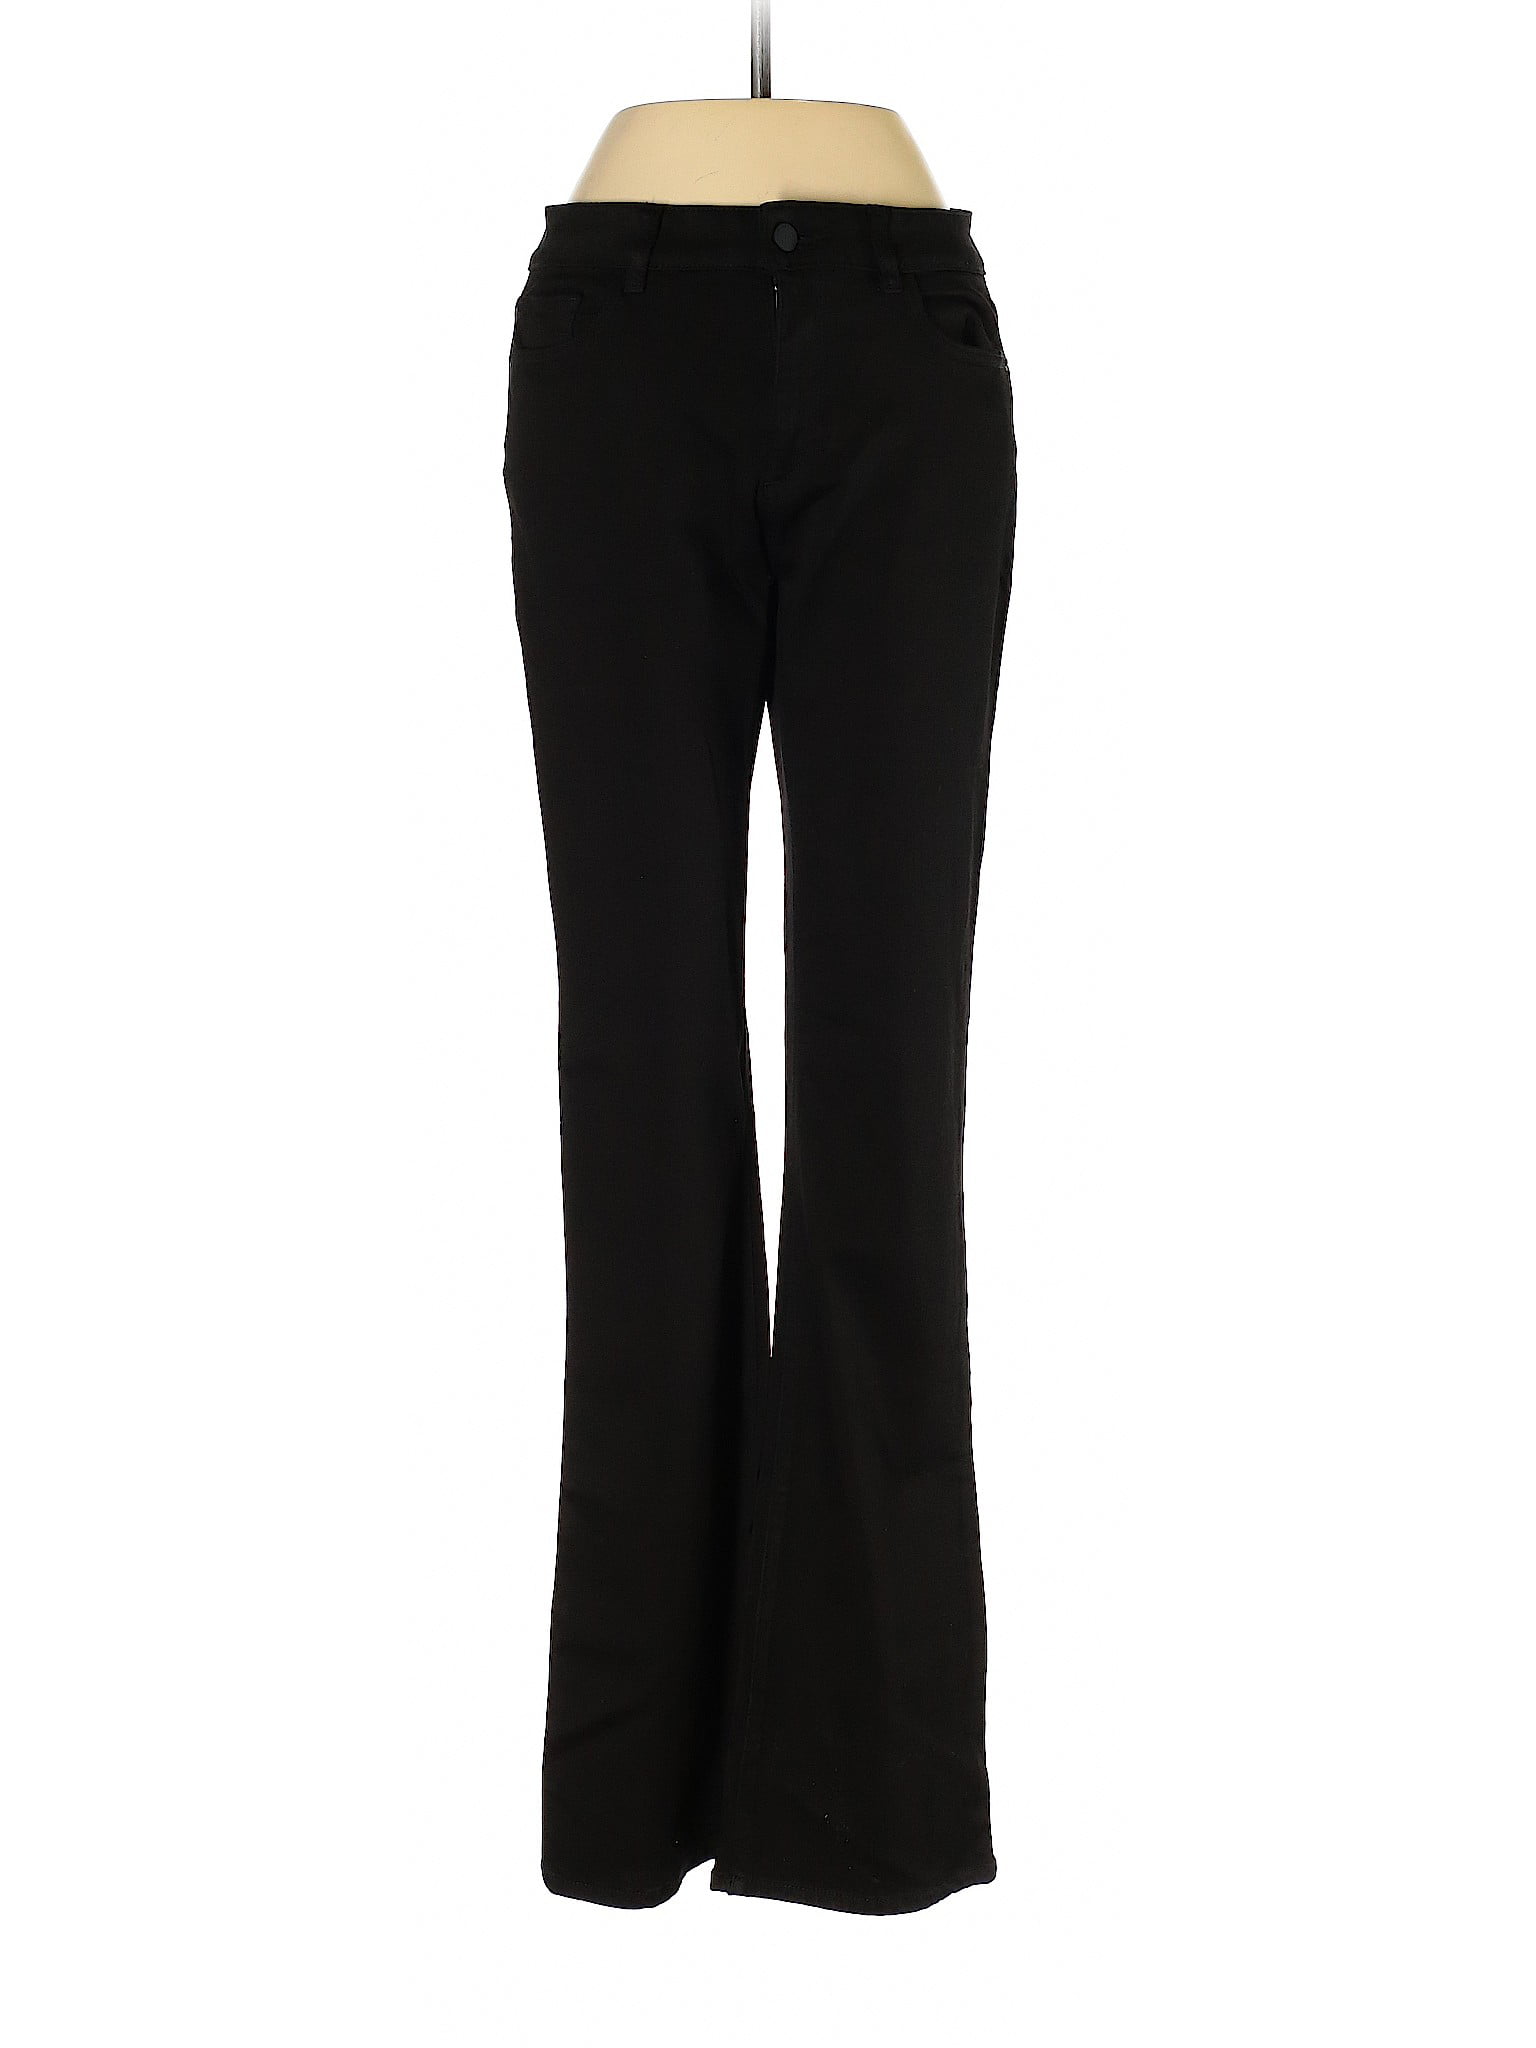 DL1961 - Pre-Owned DL1961 Women's Size 26W Jeans - Walmart.com ...